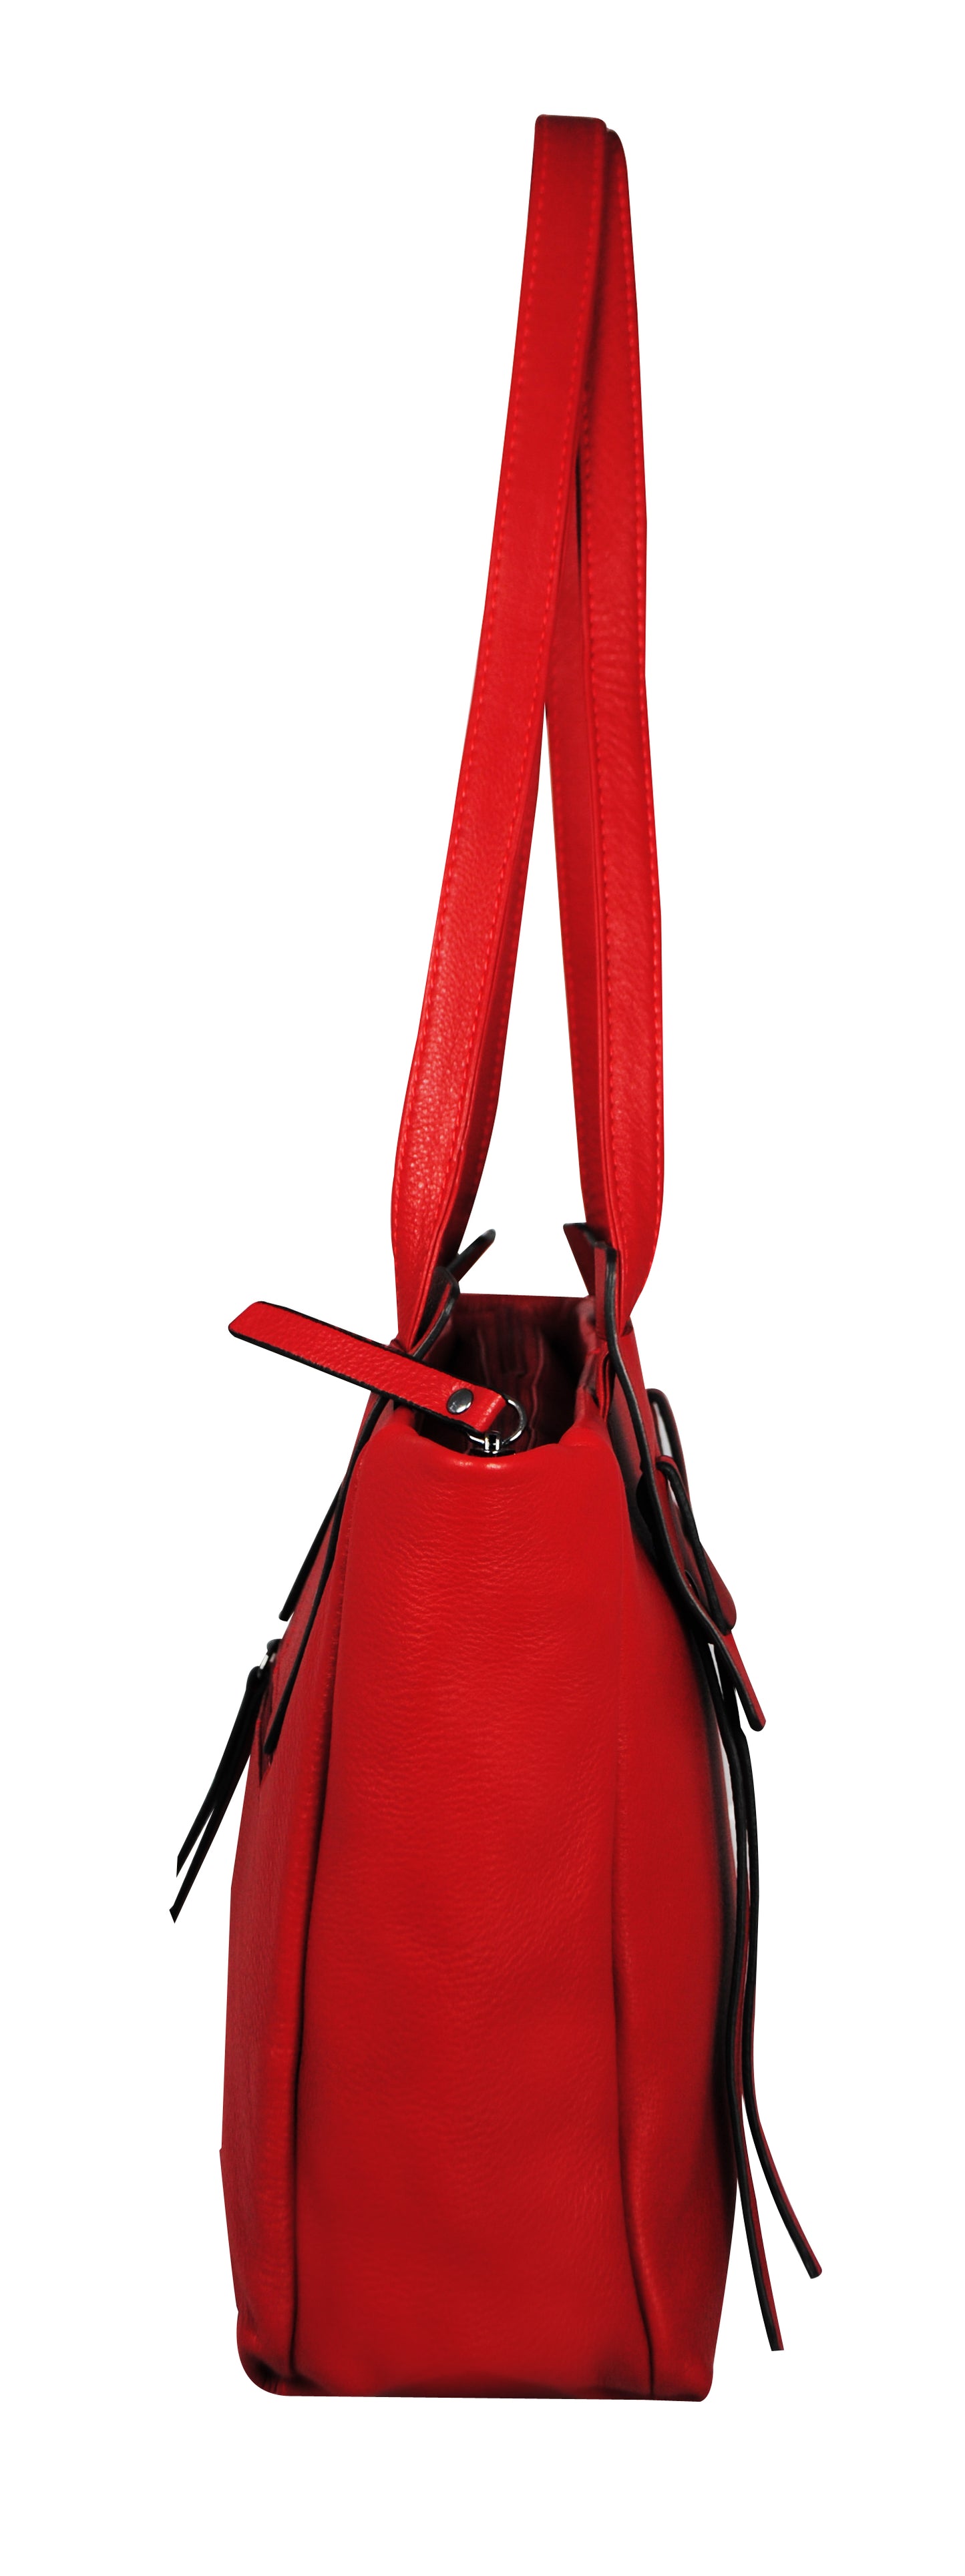 Calfnero Women's Genuine Leather Shoulder Bag (713357-Red)